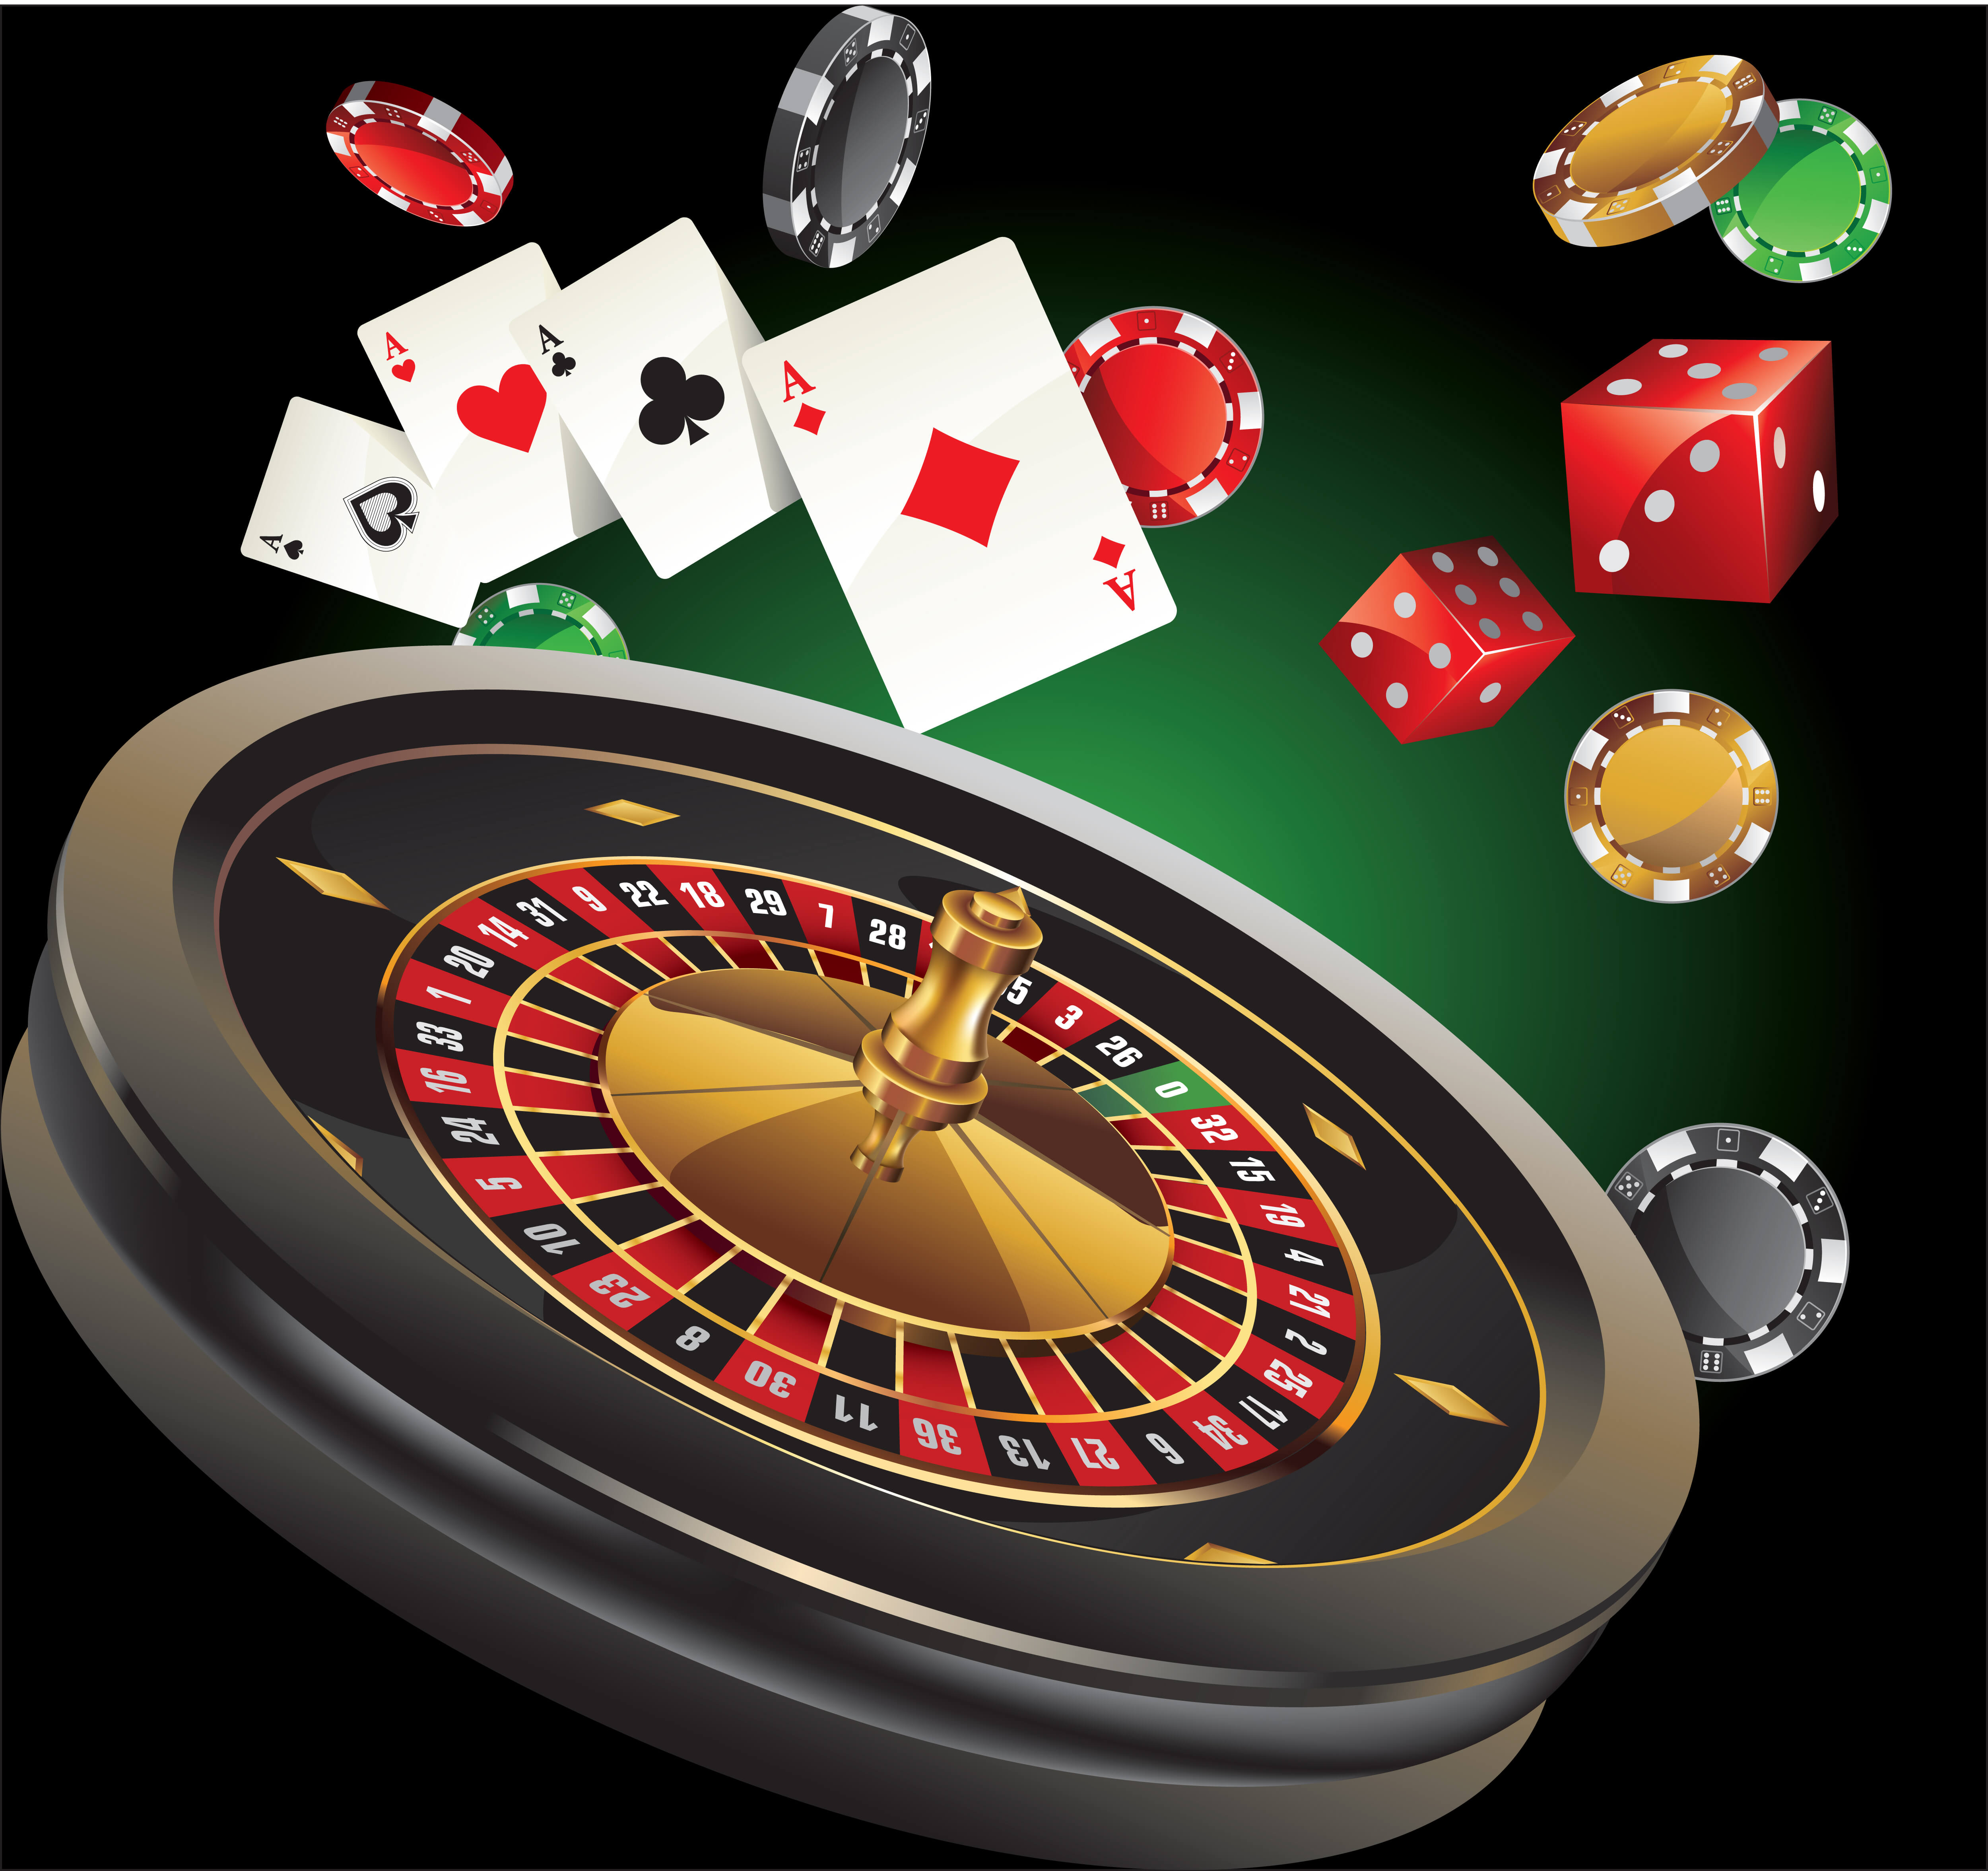 vegasslotsonline com free spins casinos centurion